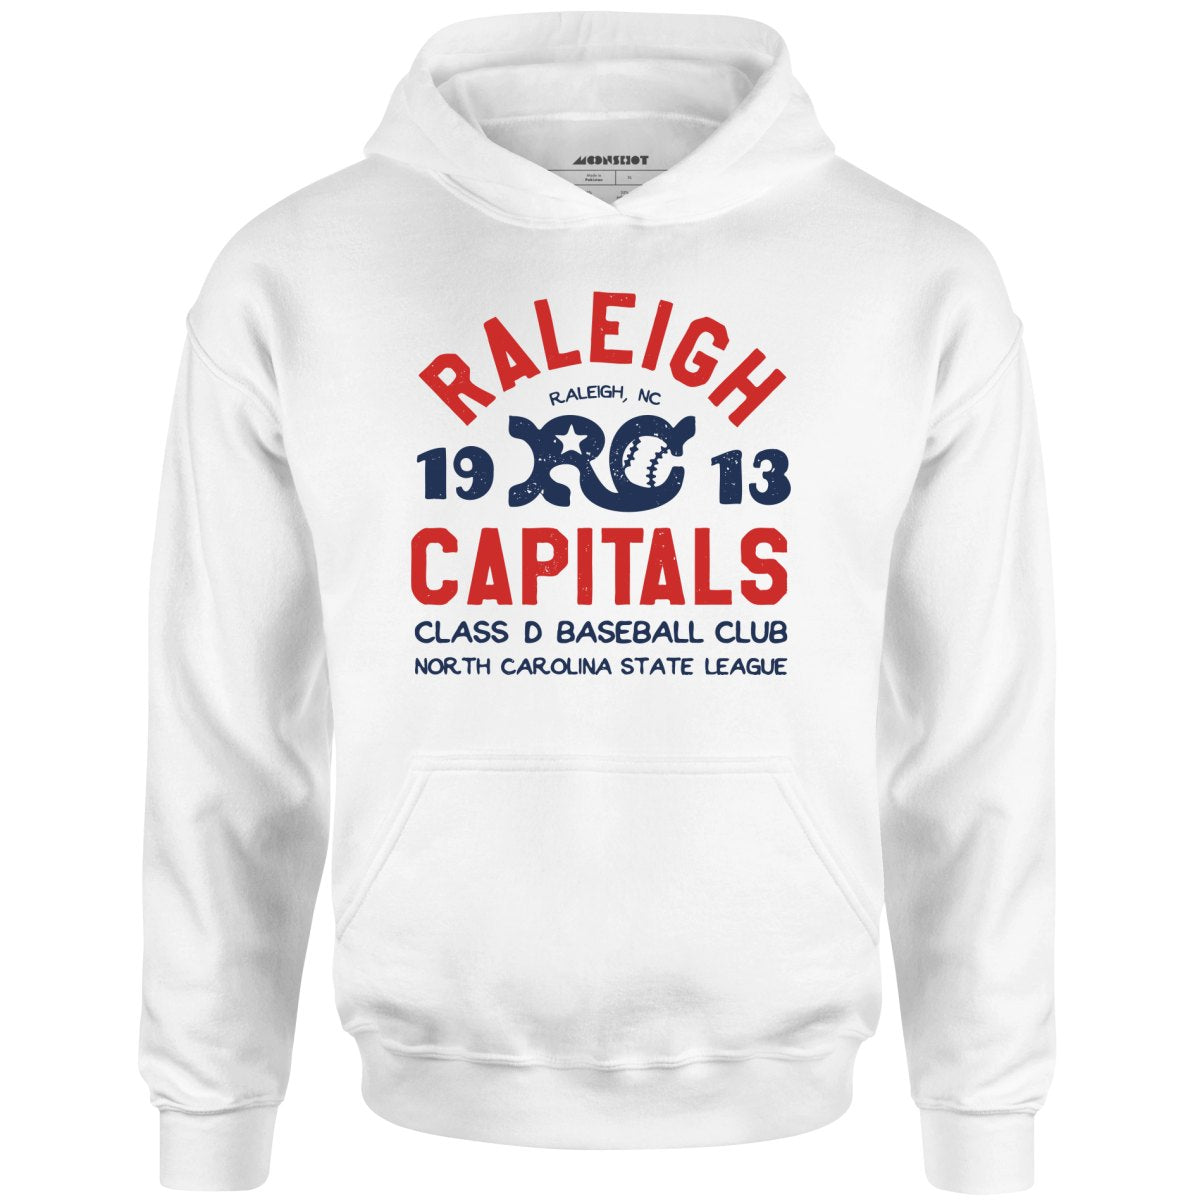 Raleigh Capitals - North Carolina - Vintage Defunct Baseball Teams - Unisex Hoodie